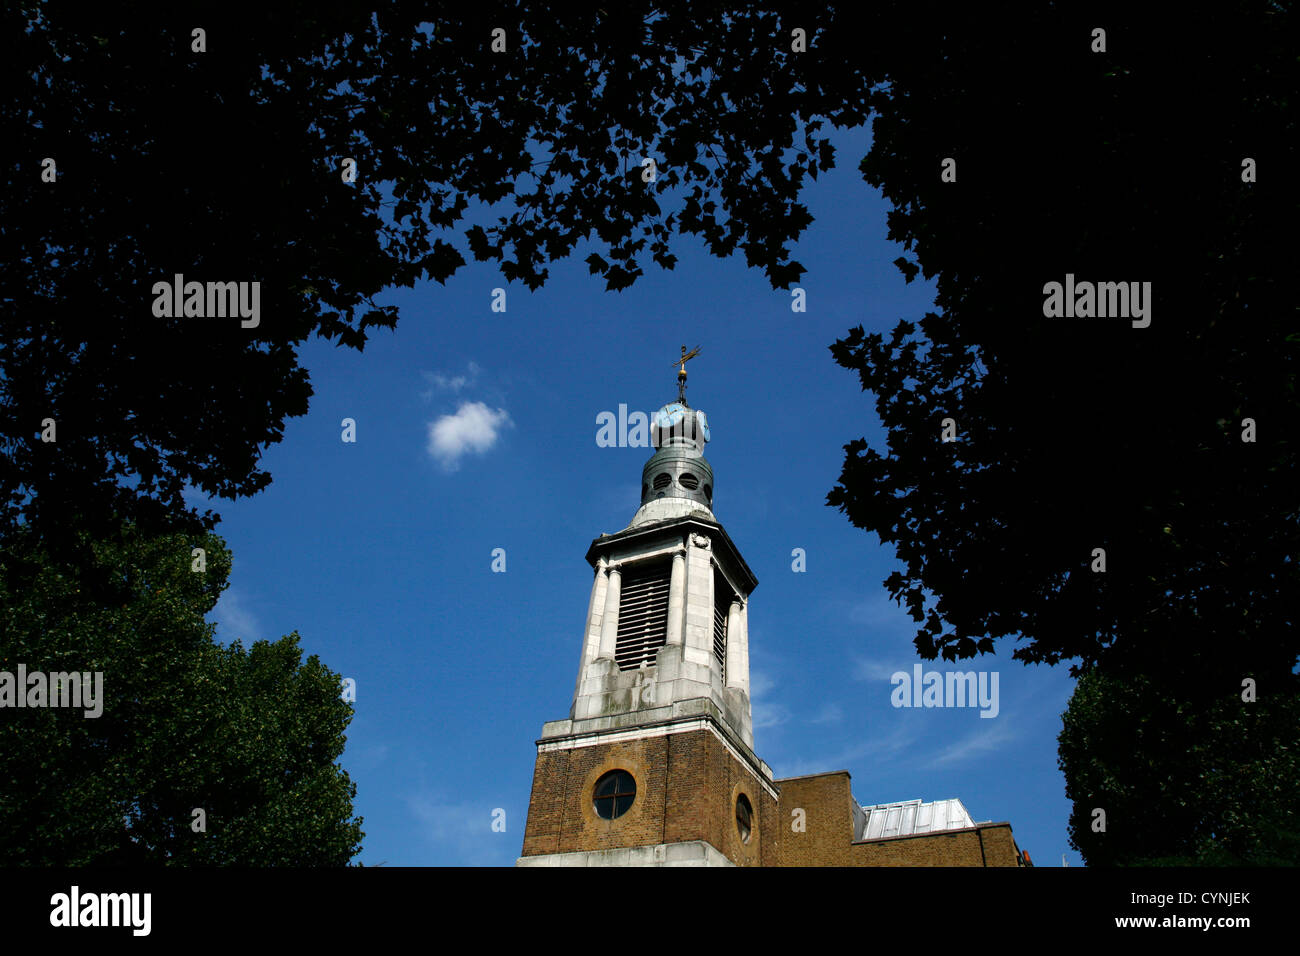 Steeple of St Anne's church, Soho, London, UK Stock Photo